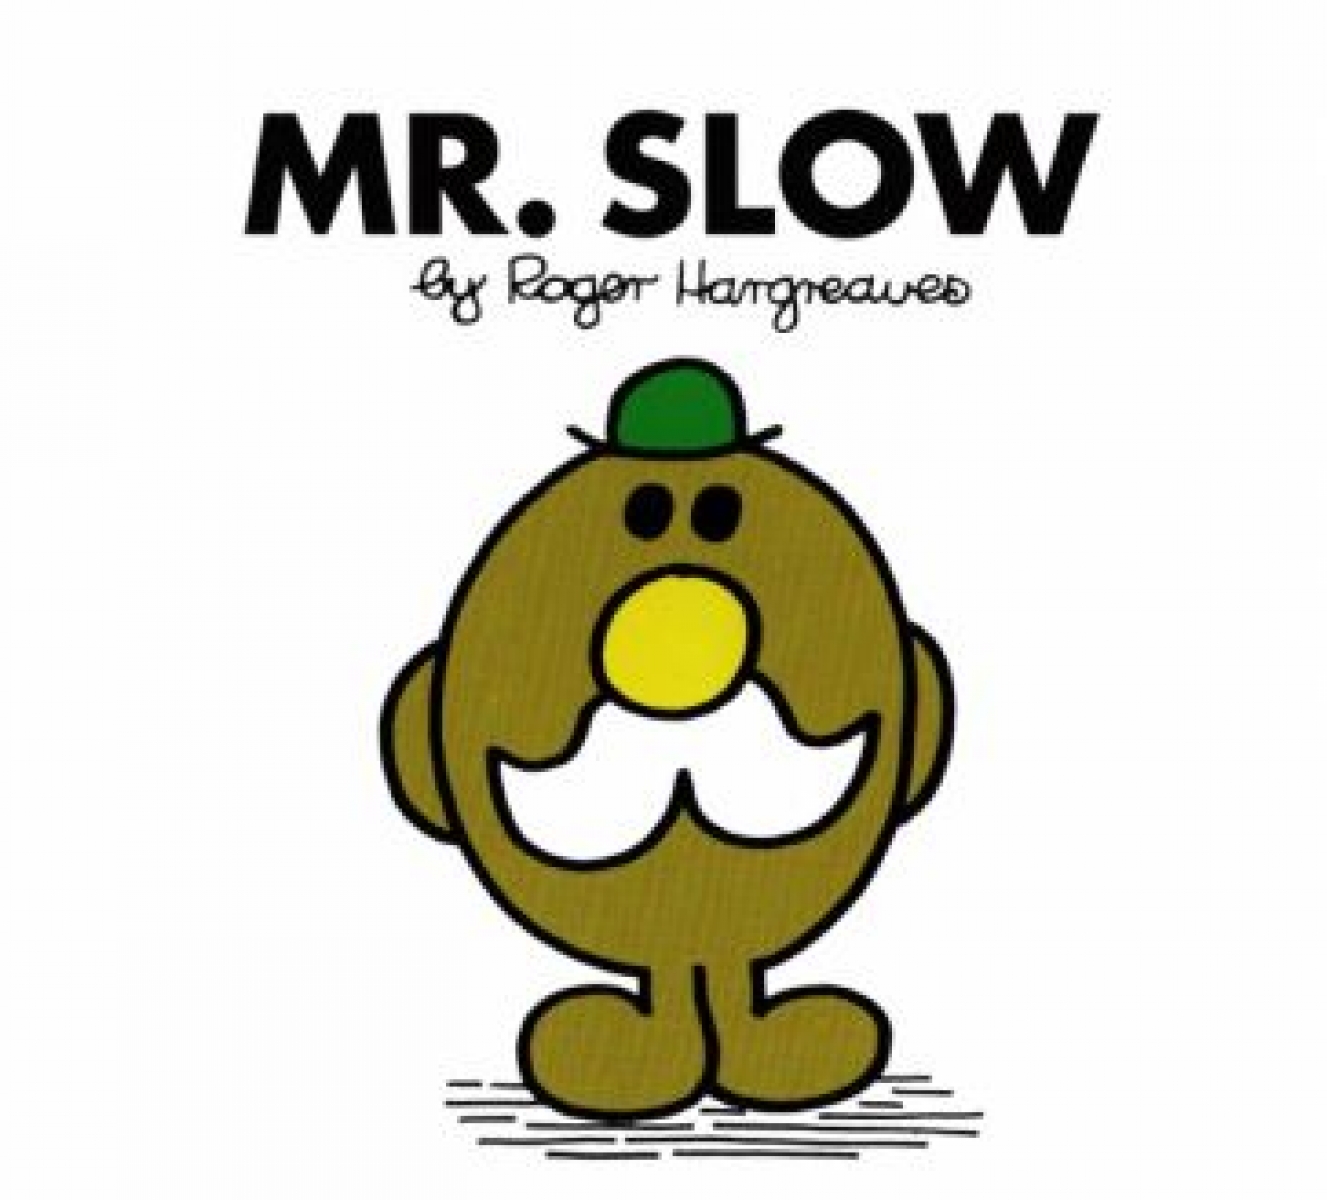 Hargreaves Roger Mr. Slow 